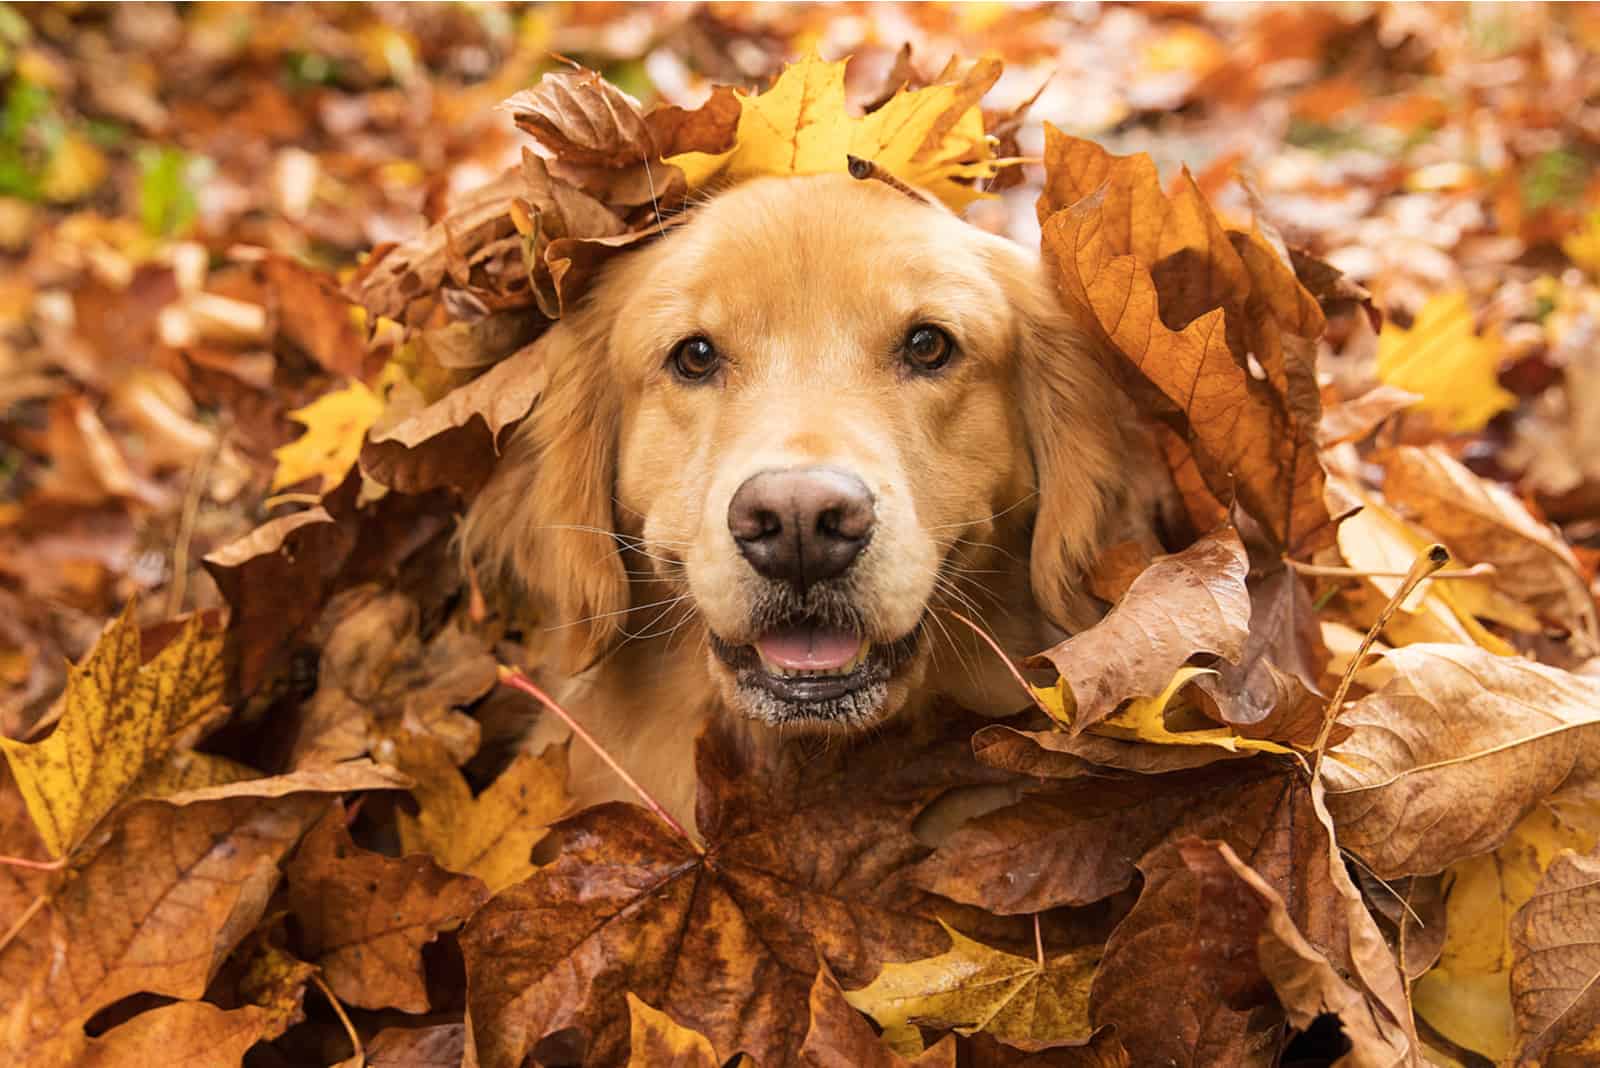 a golden retriever lies on a pile of autumn leaves